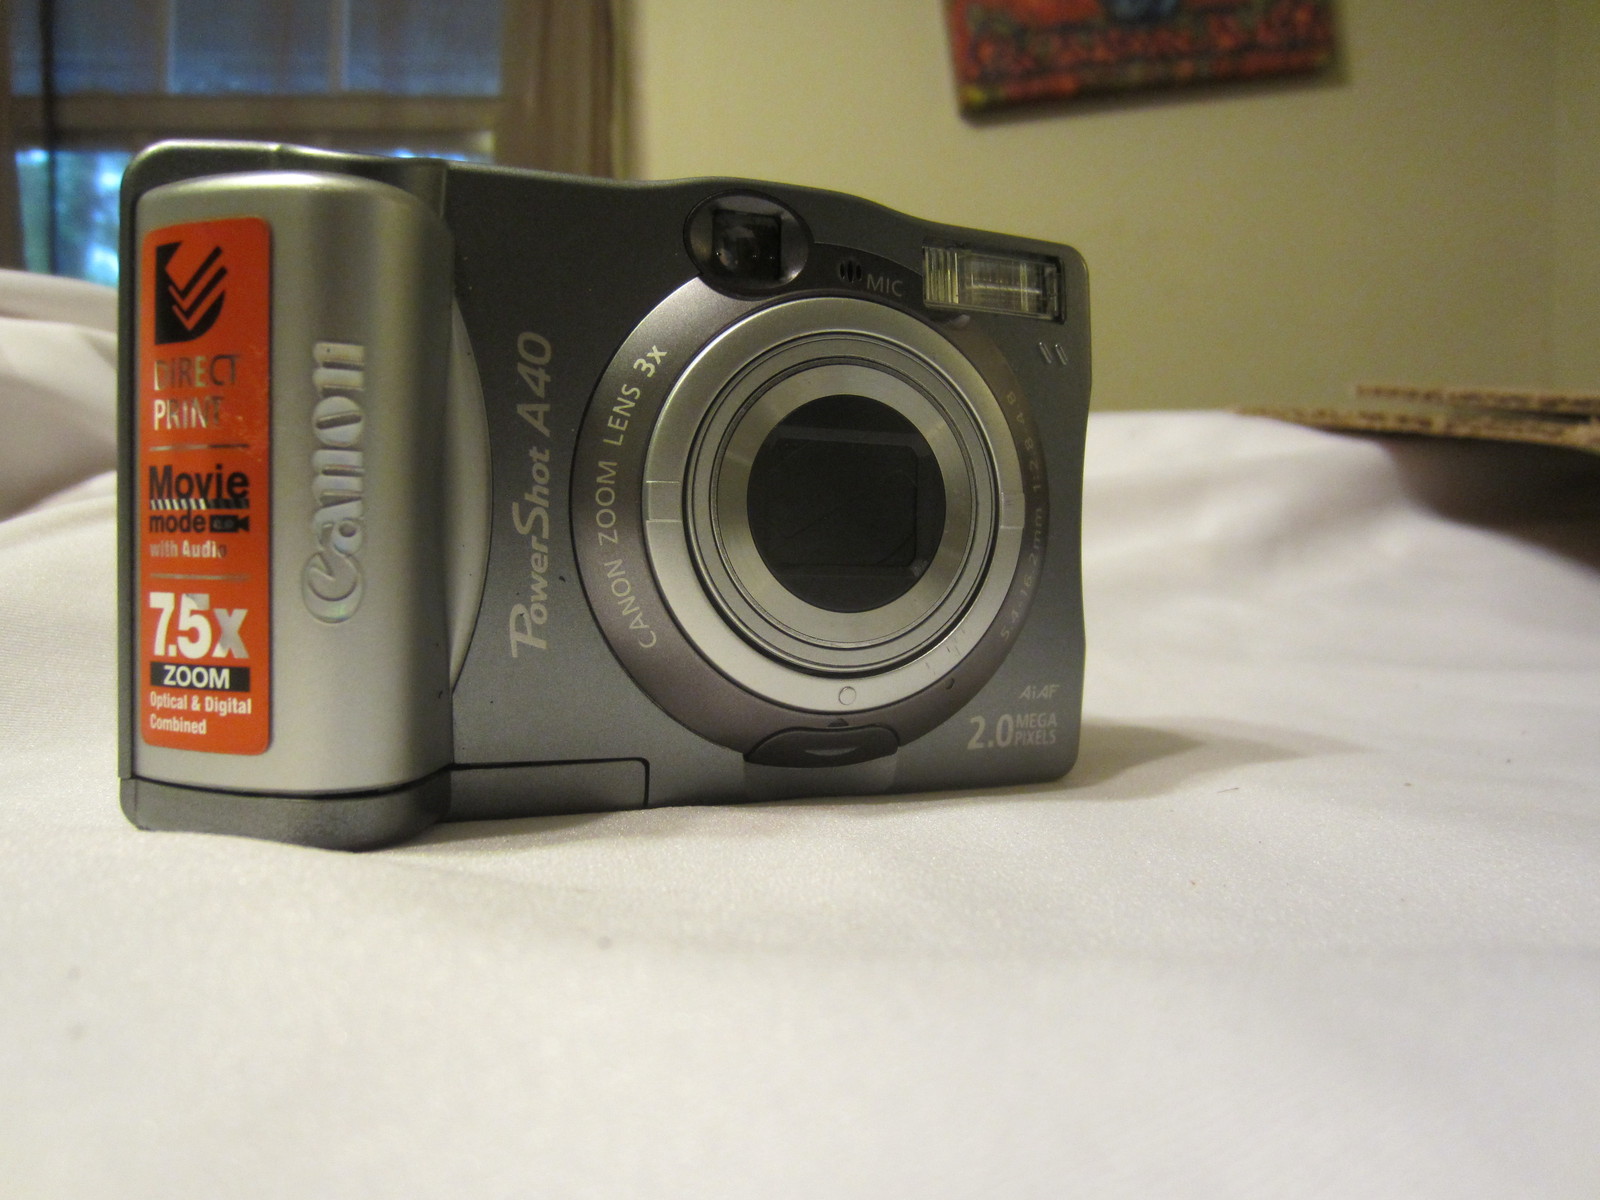 canon powershot g9x mkii 2mp 3x zoom compact digital camera